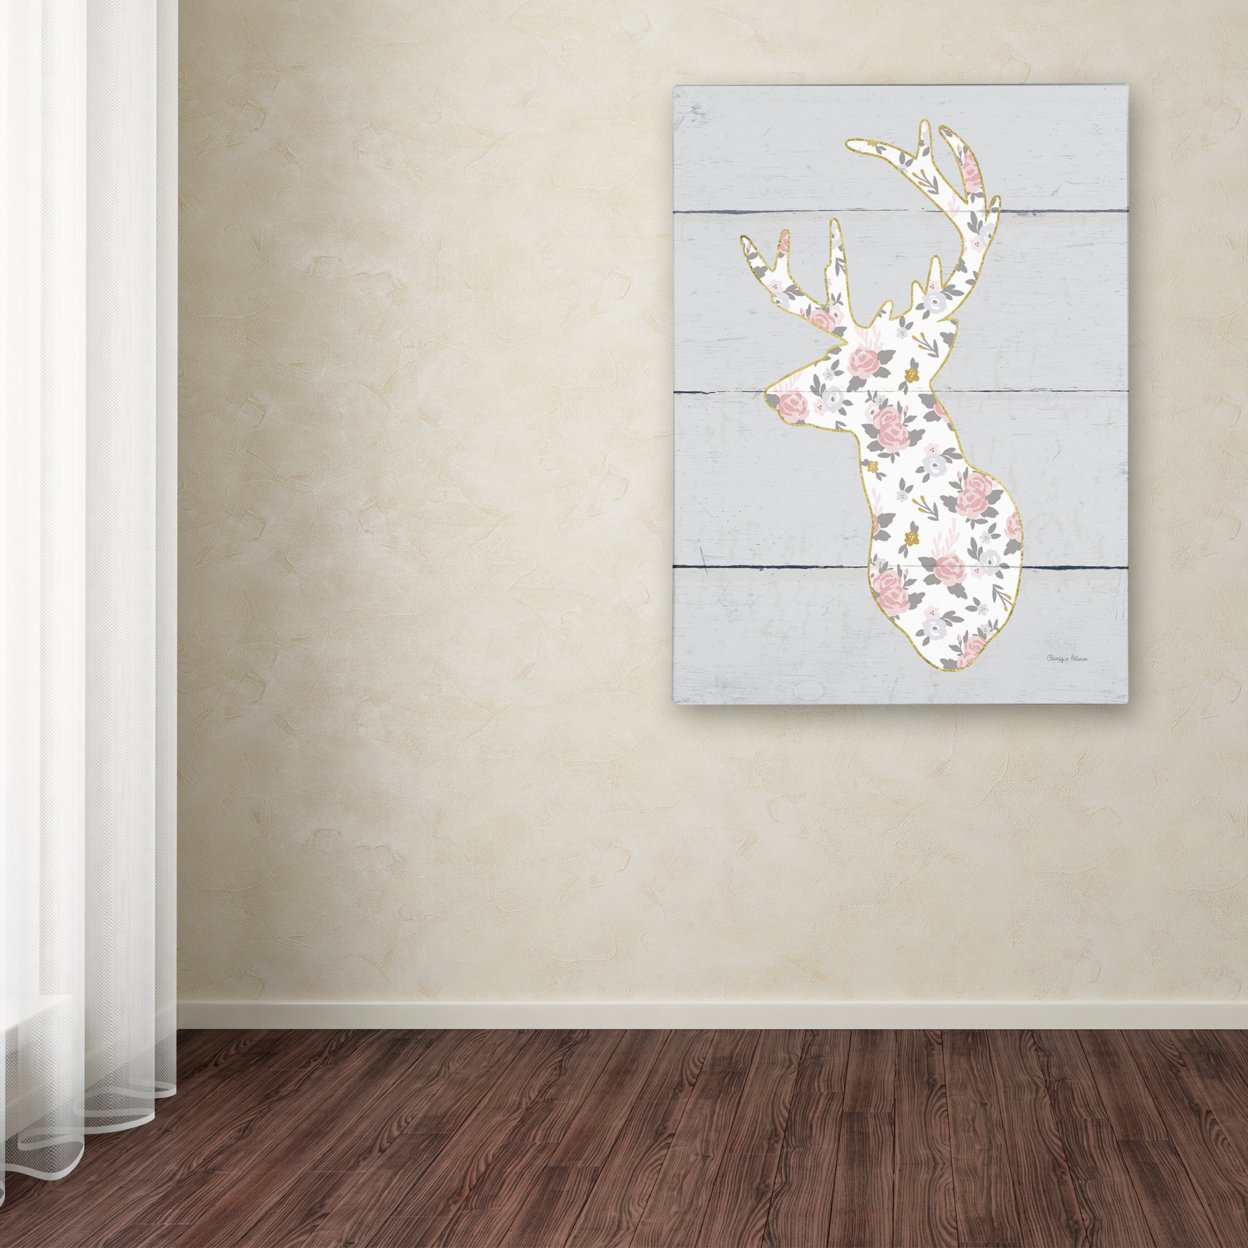 Cleonique Hilsaca 'Floral Deer II' Canvas Art